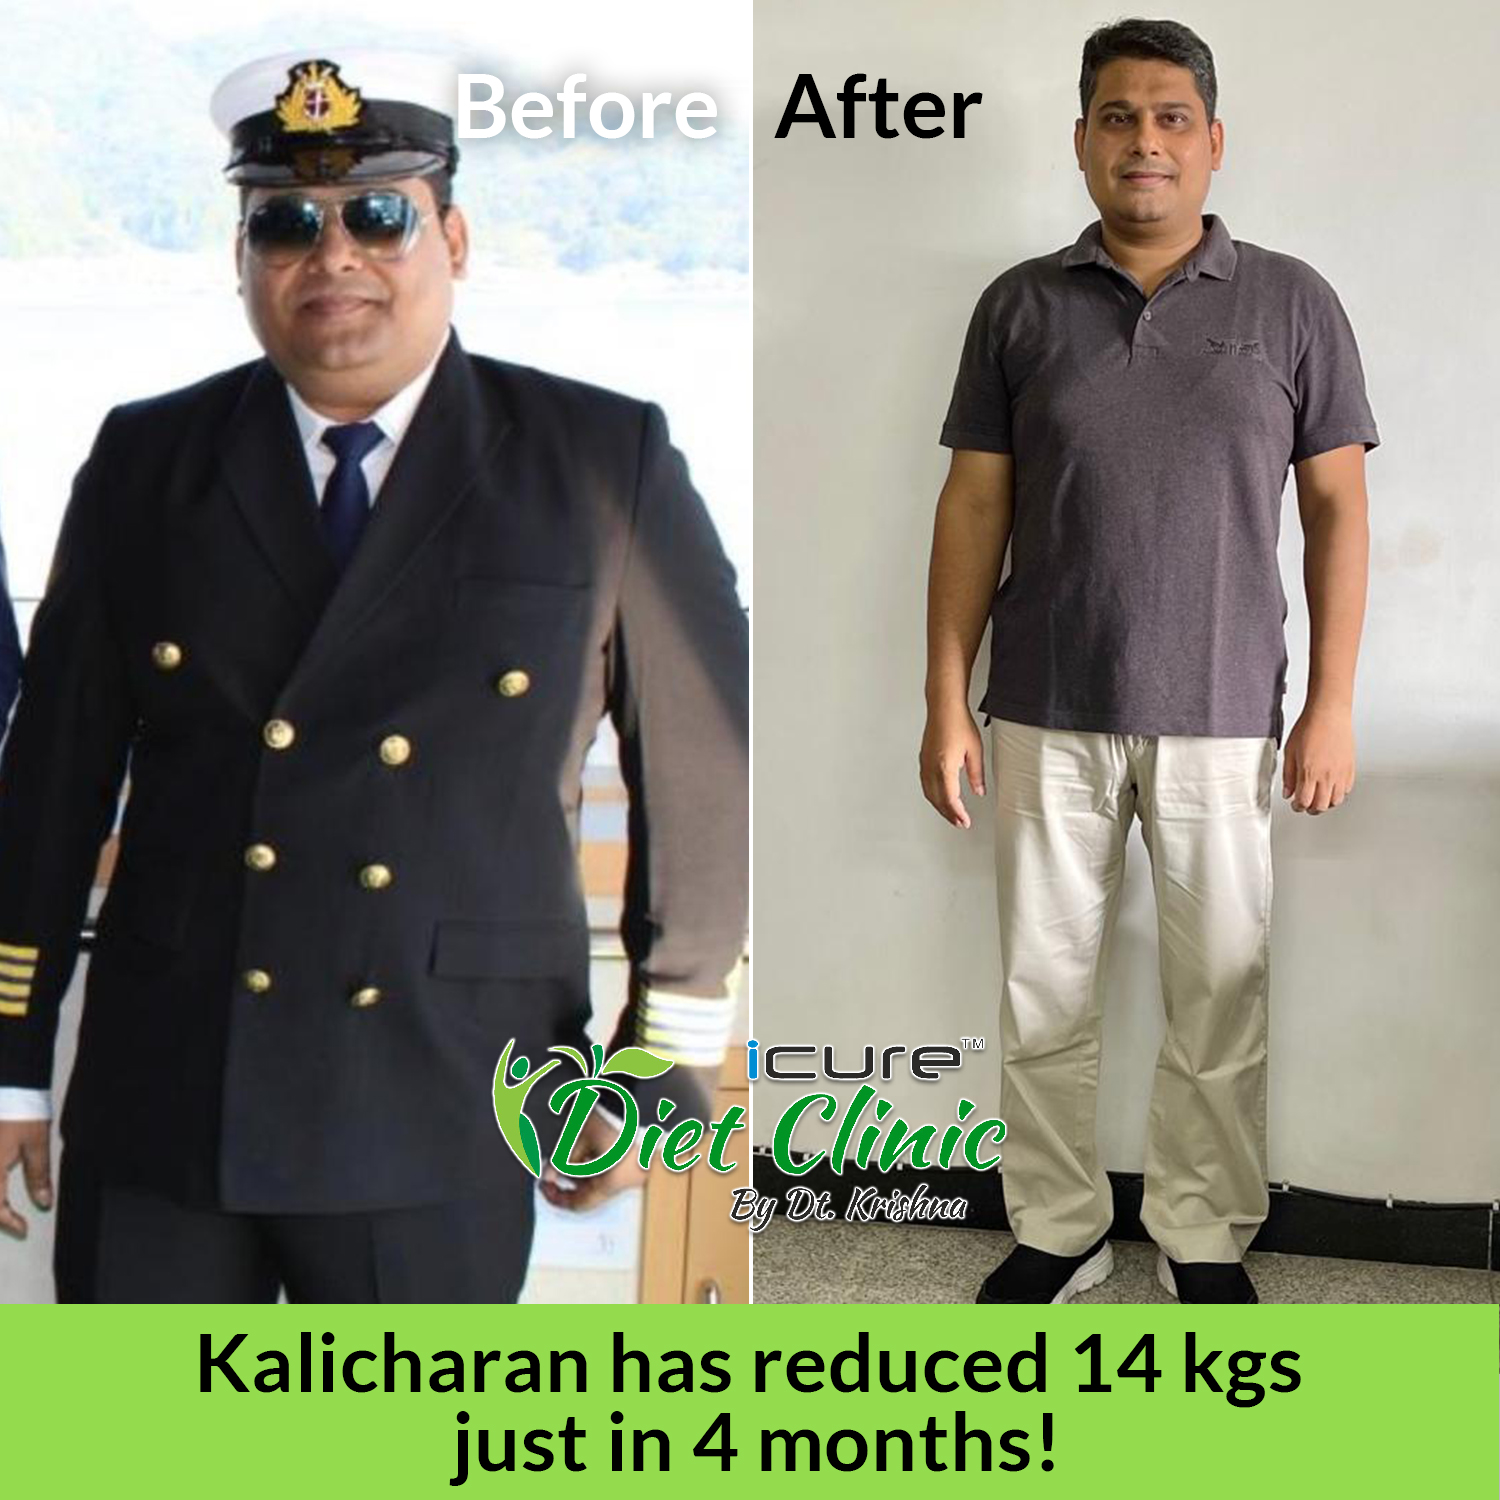 Kalicharan reduced 14 kgs in 4 months